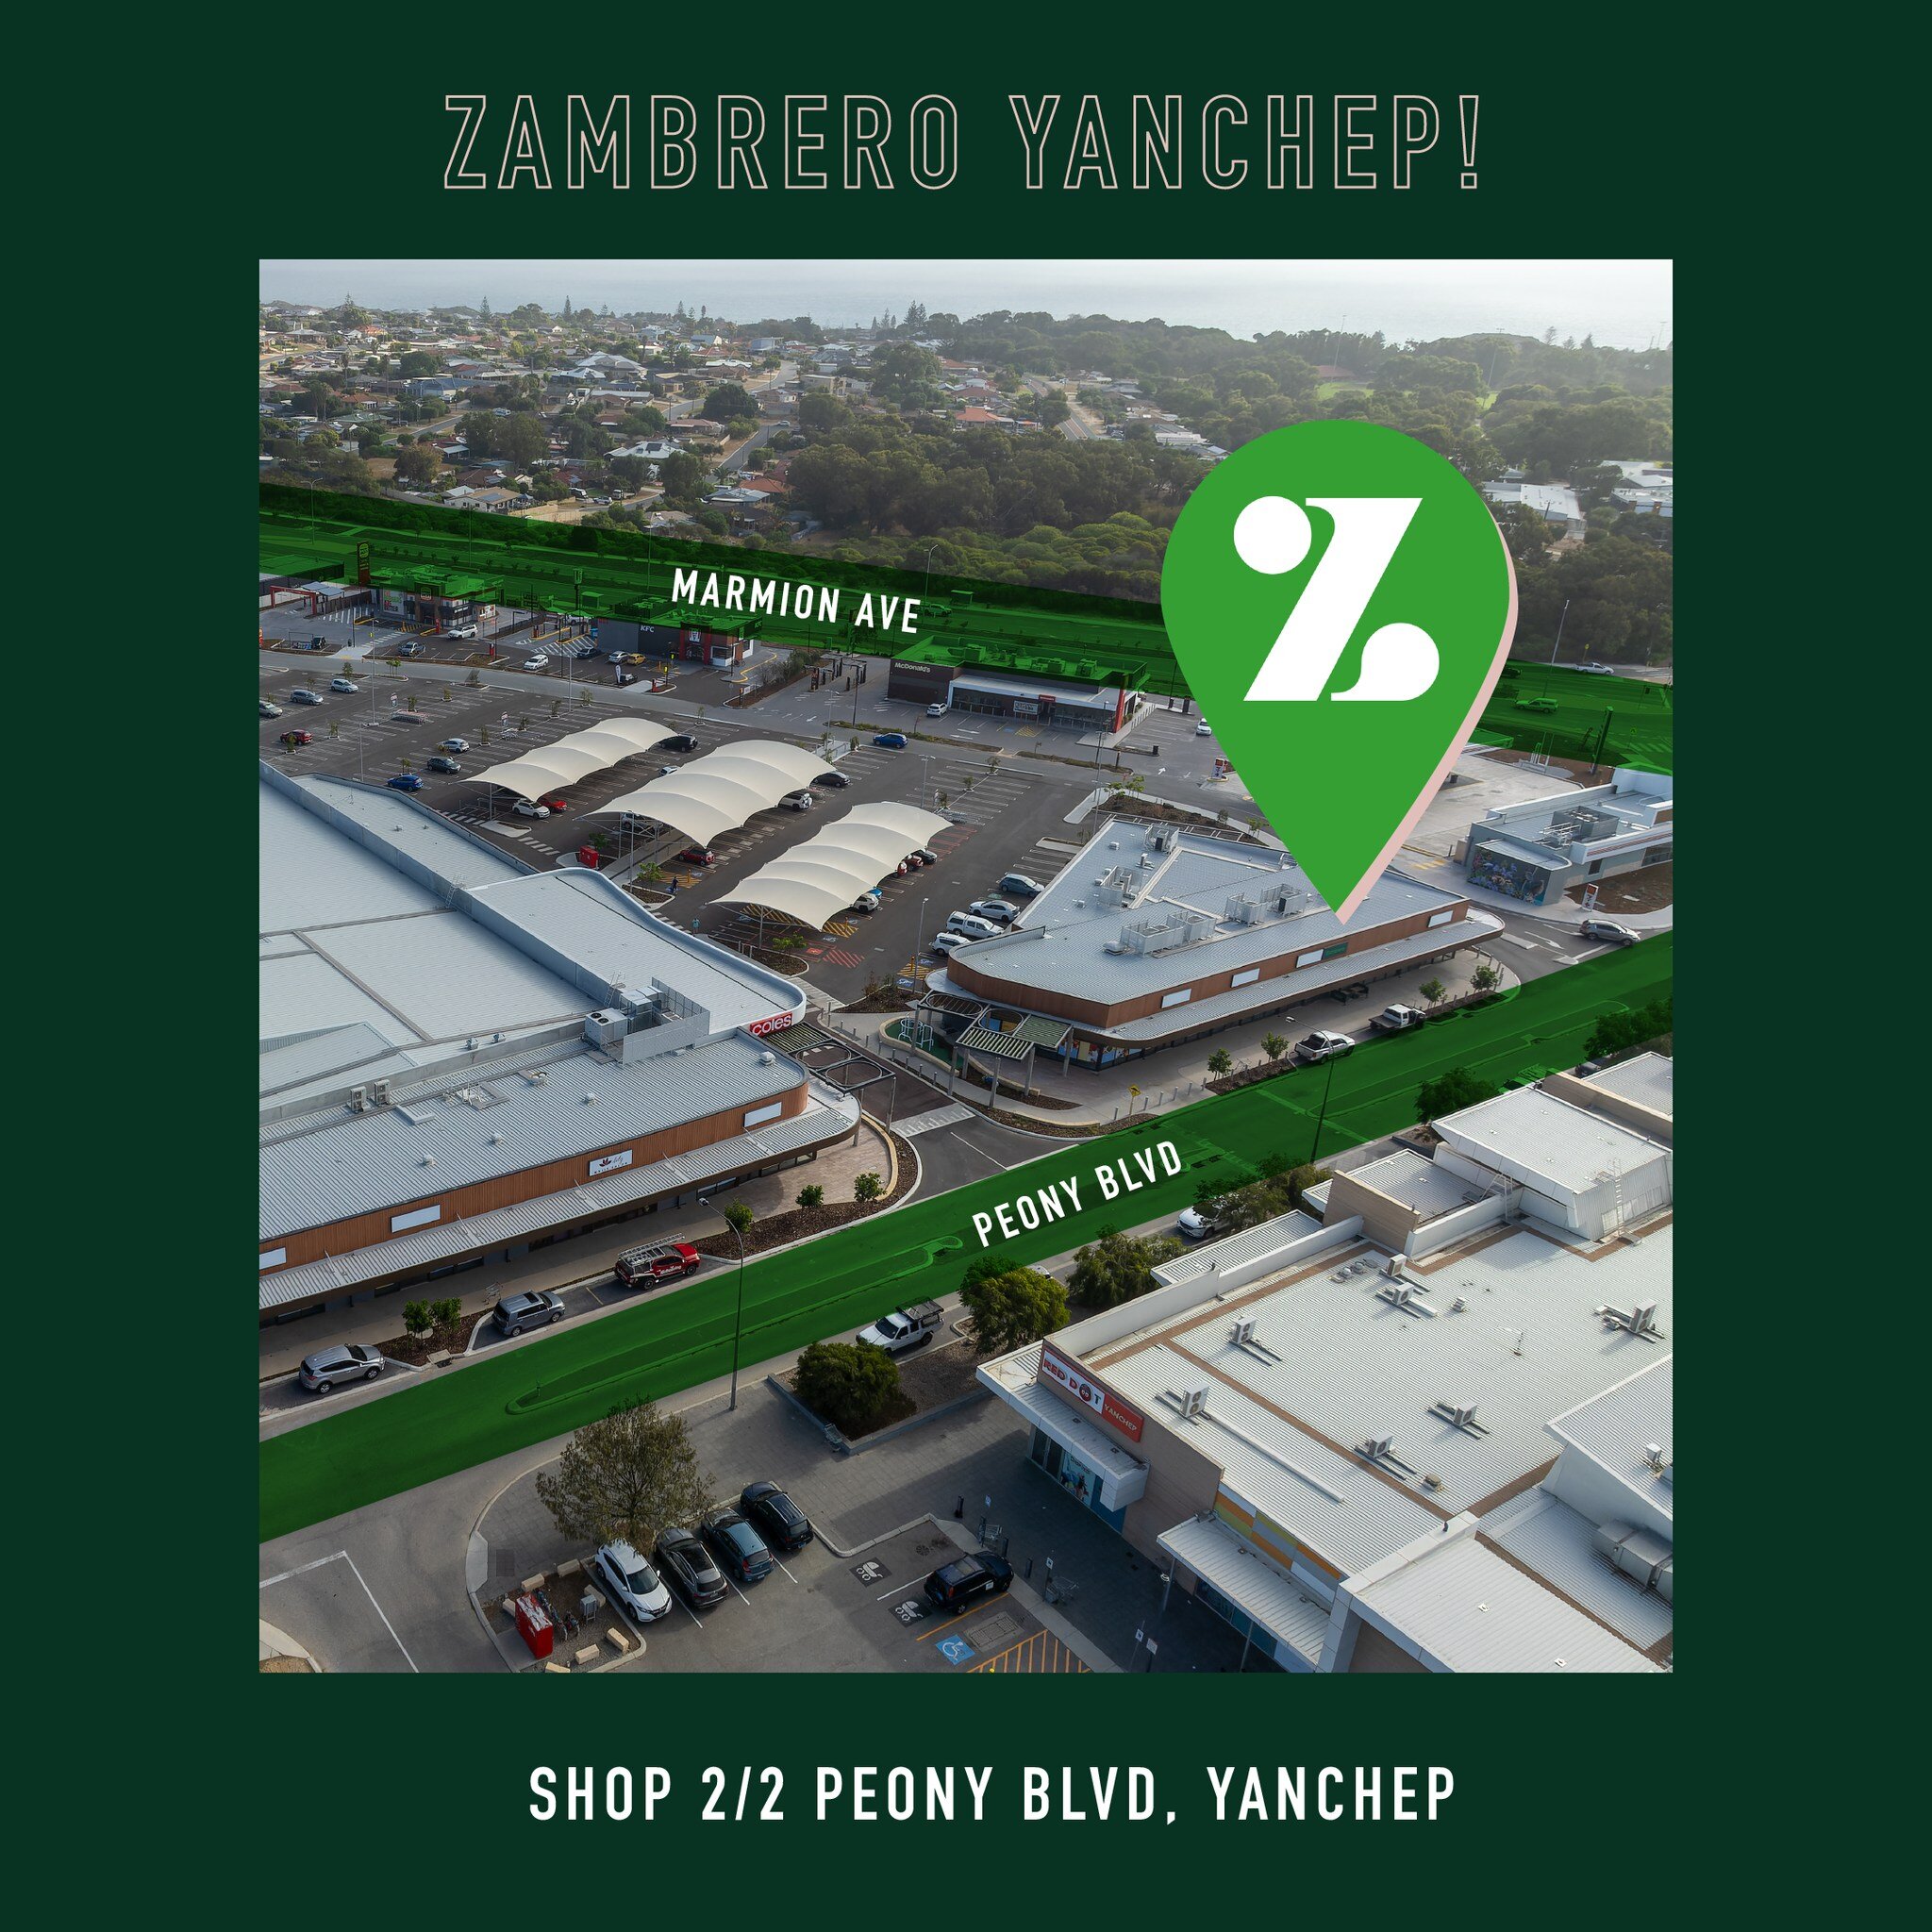 📍 Zambrero Yanchep is located at shop 2/2 Peony Boulevard, Yanchep Village. 

Plenty of centre car parks plus on street parking available.